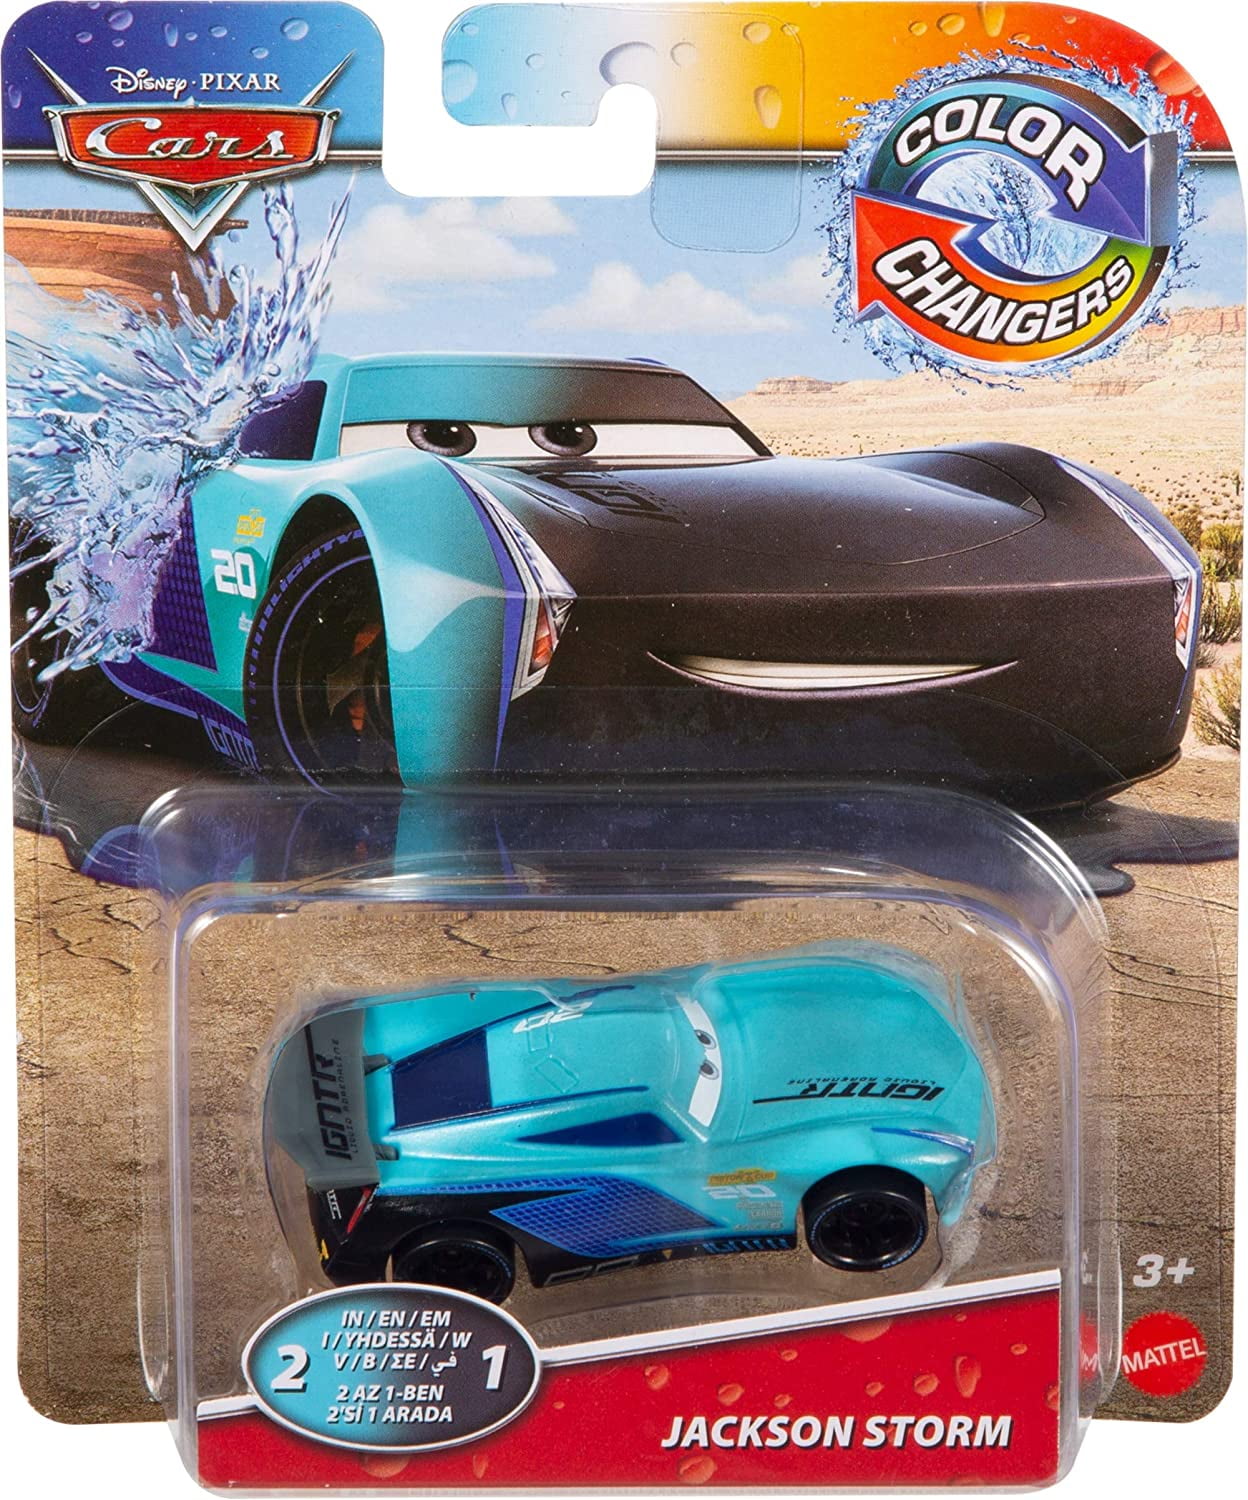 Disney Cars Toys Pixar Cars Color Changers Lightning McQueen, lightning  mcqueen toys 